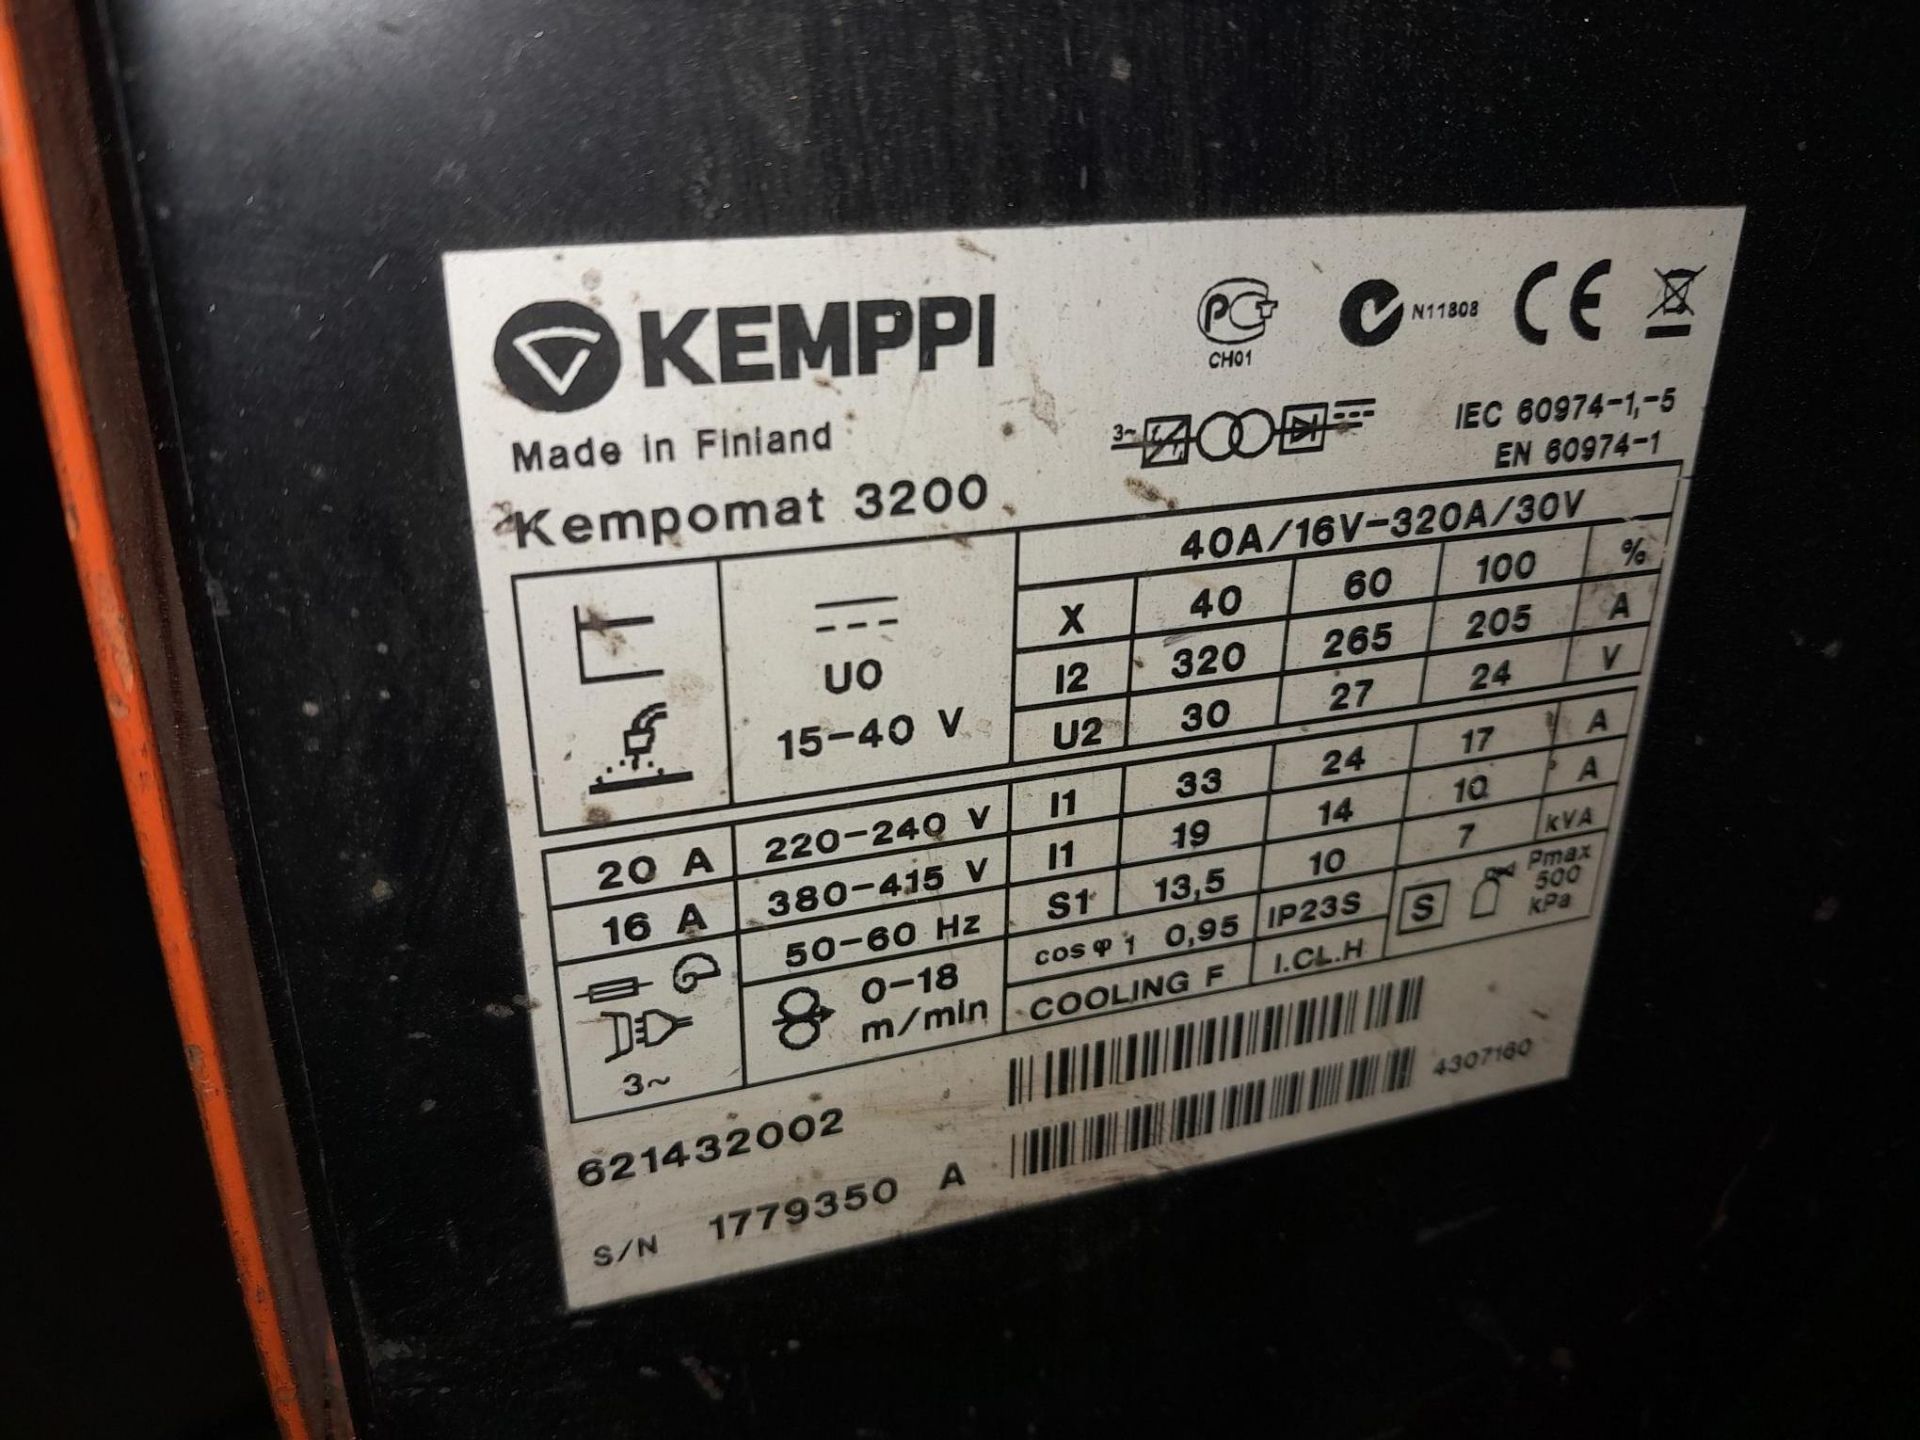 Kemppi Kempomat 3200 welding set, Serial Number 17 - Bild 2 aus 2